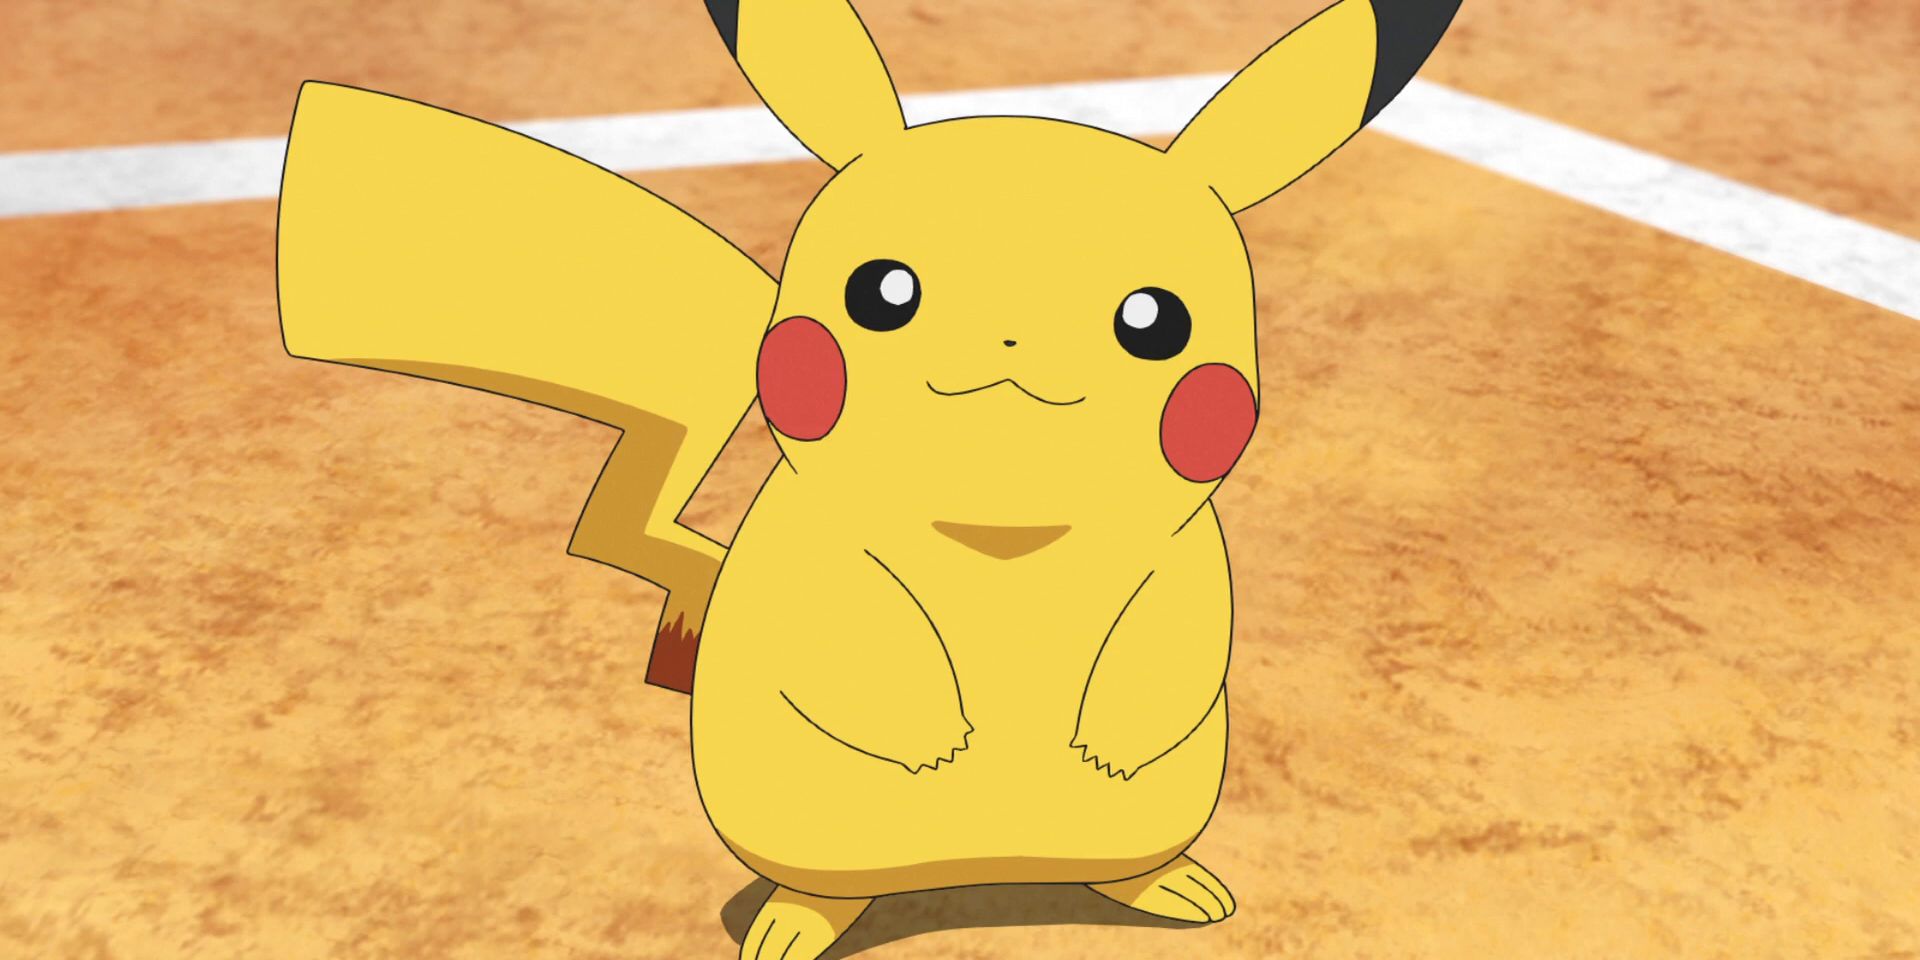 Pokémon: Pikachu de tamaño natural muestra movimientos eléctricos como cargador de teléfono